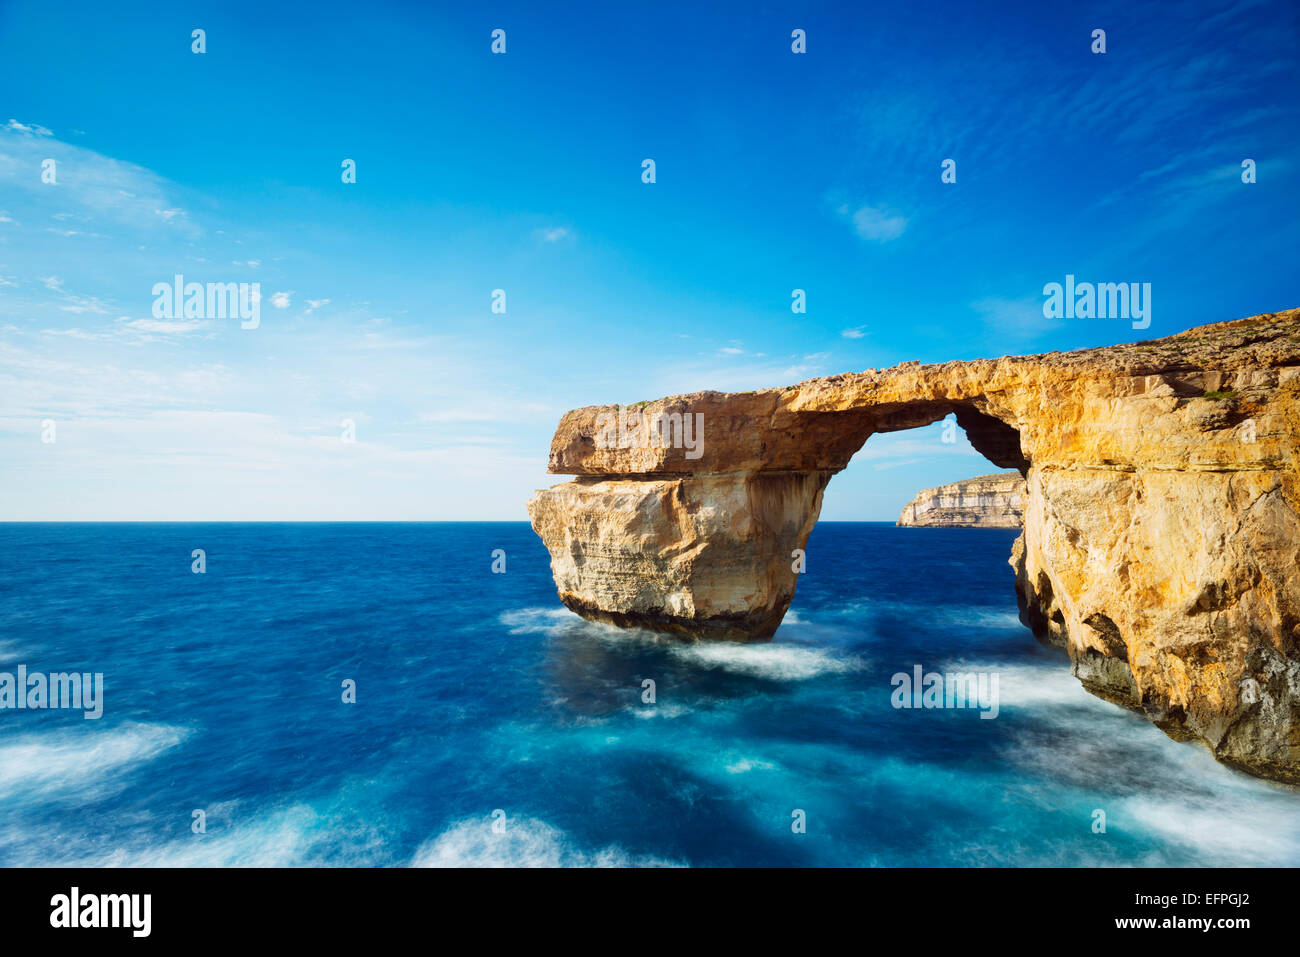 La ventana azul arco natural, Dwerja Bay, Isla de Gozo, Malta, el Mediterráneo, Europa Foto de stock